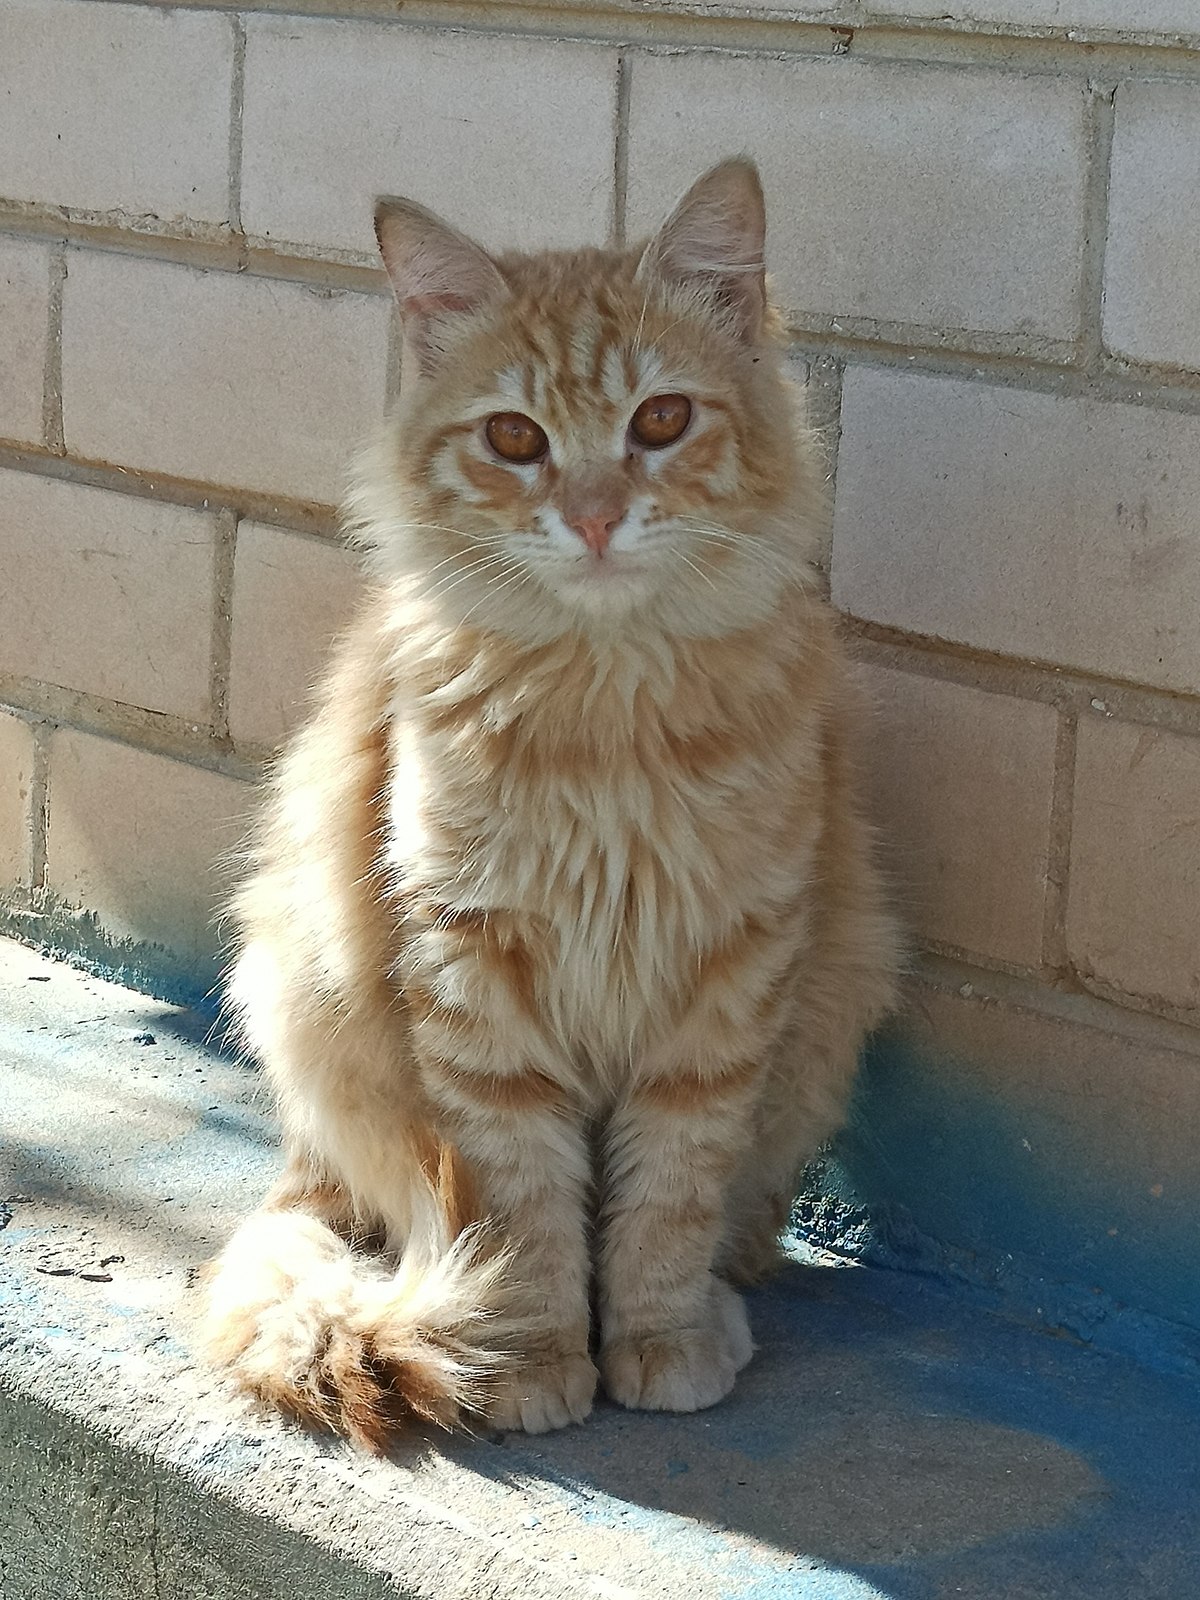 åbning tag et billede nøje File:Amber-eyed red mackerel tabby cat in Bat Yam, Israel.jpg - Wikimedia  Commons